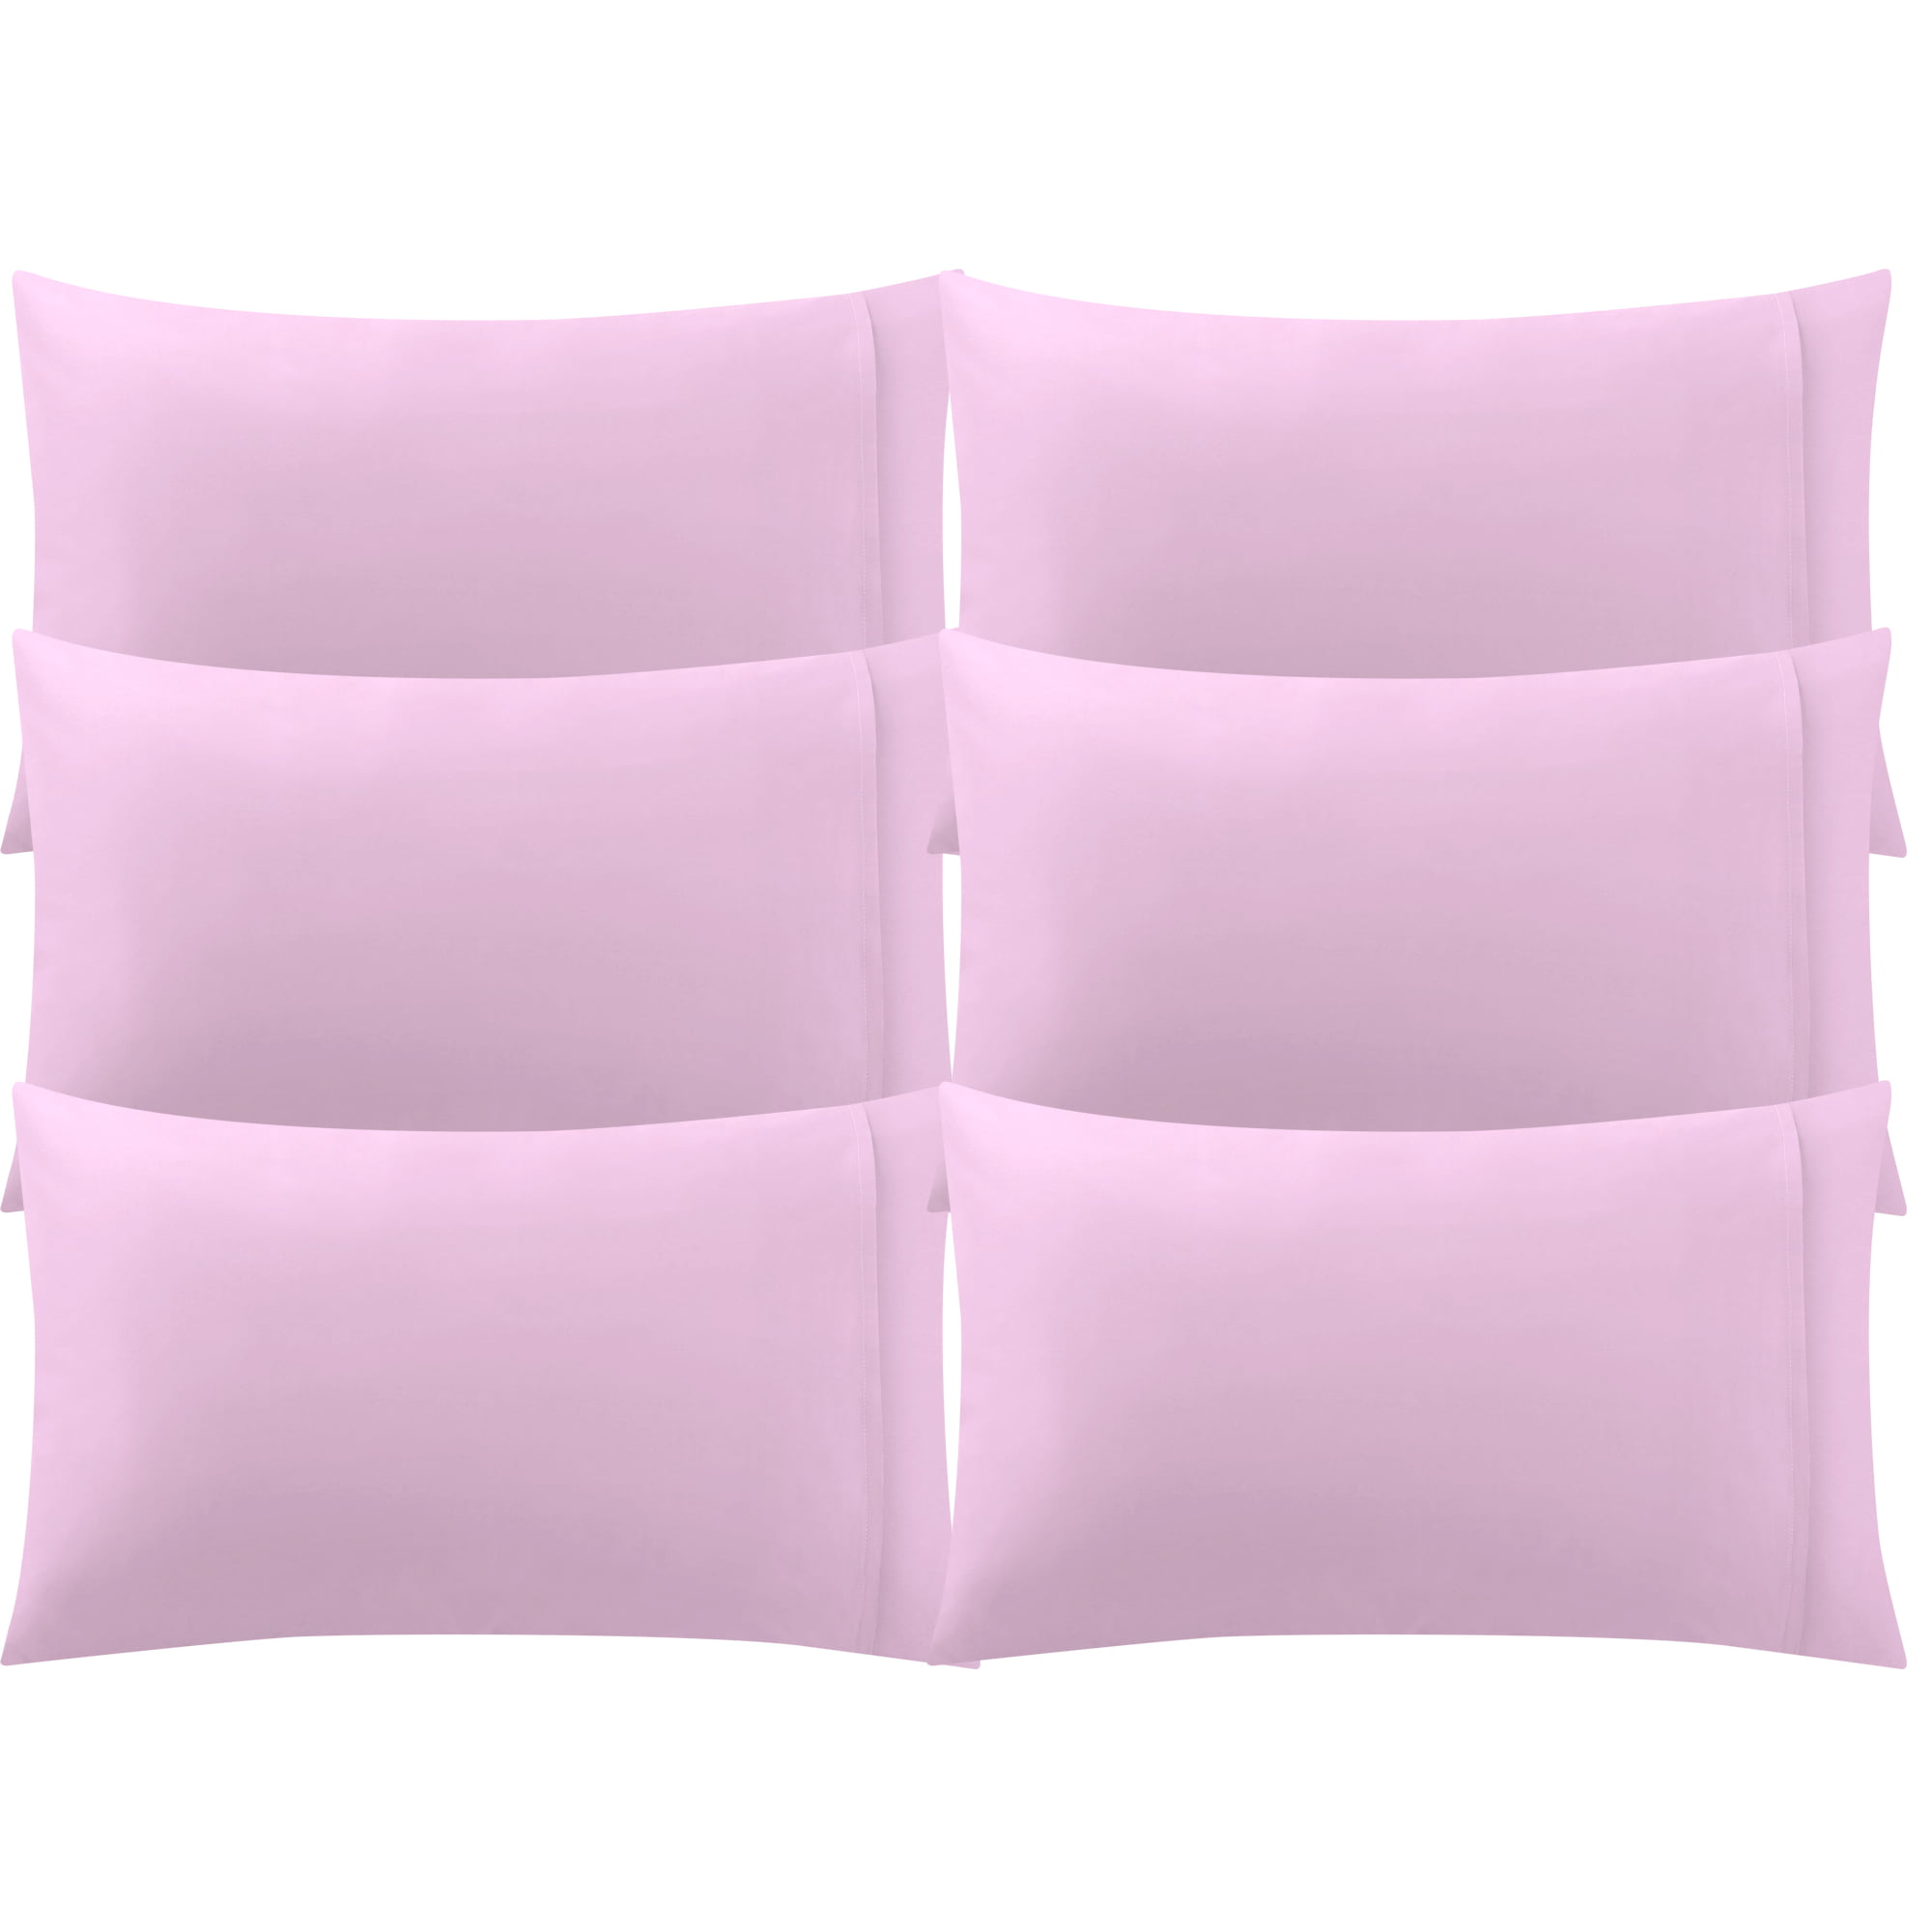 Company Store Chelsea Standard Pillowcase Pair 24”x32” Flower 100% Cotton 